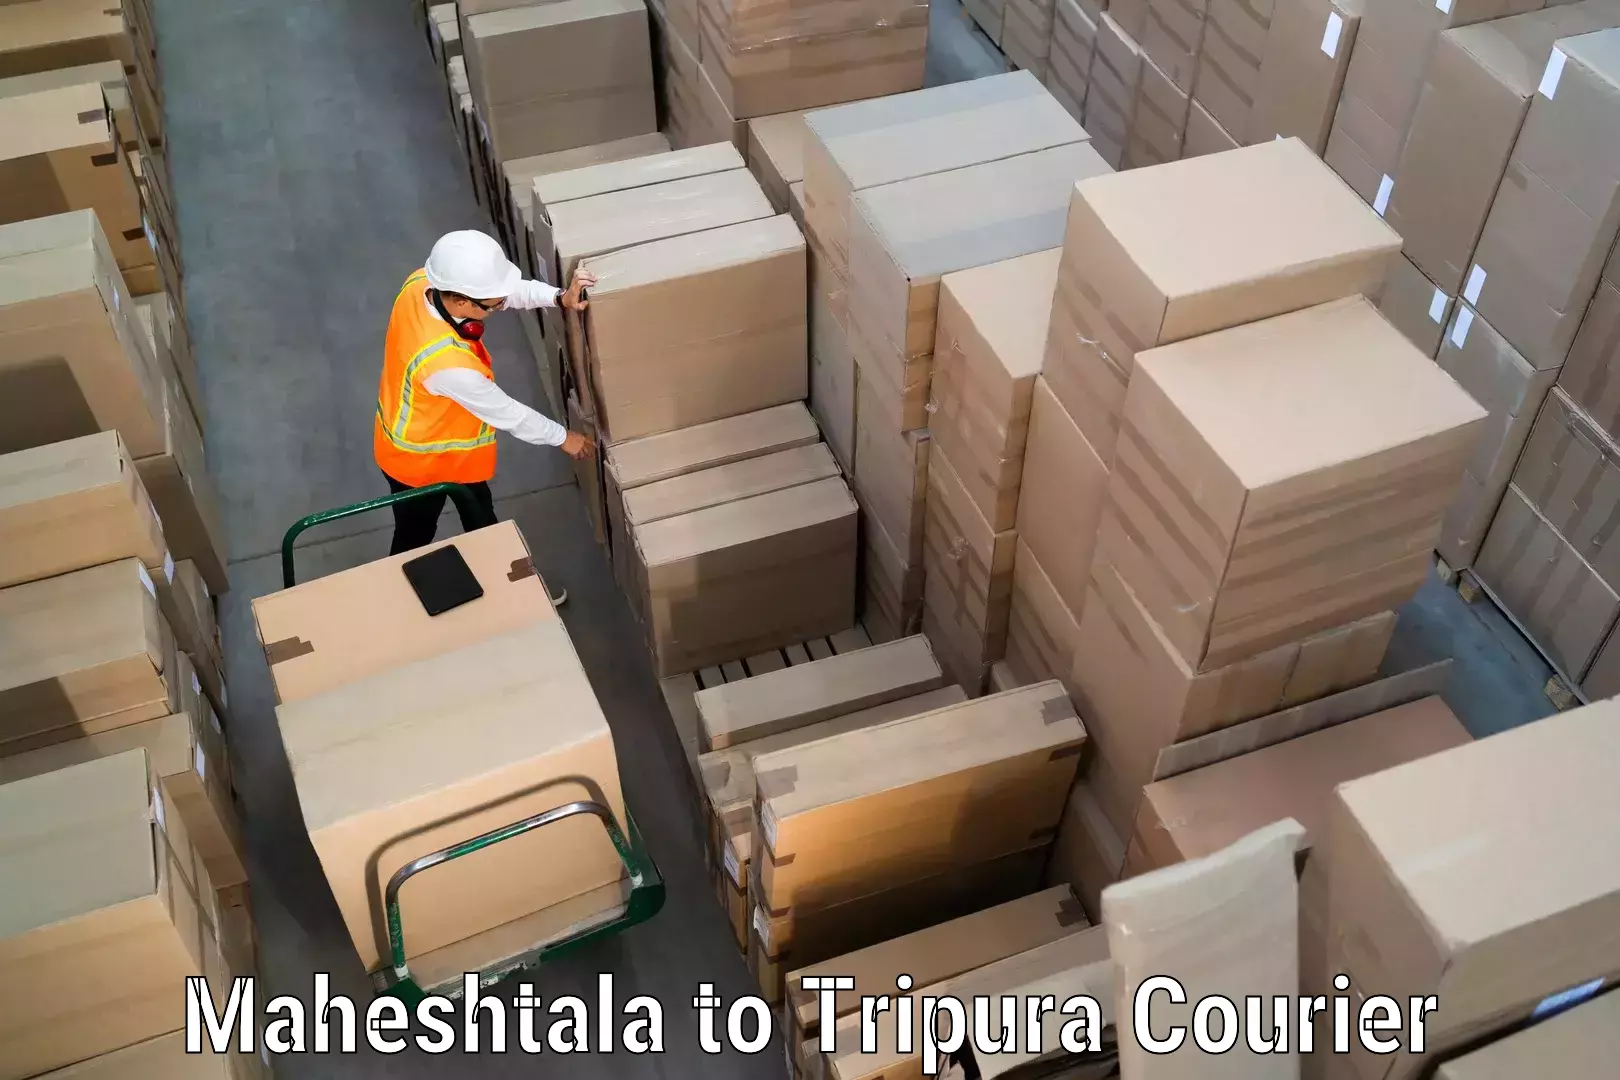 Courier service booking Maheshtala to Agartala